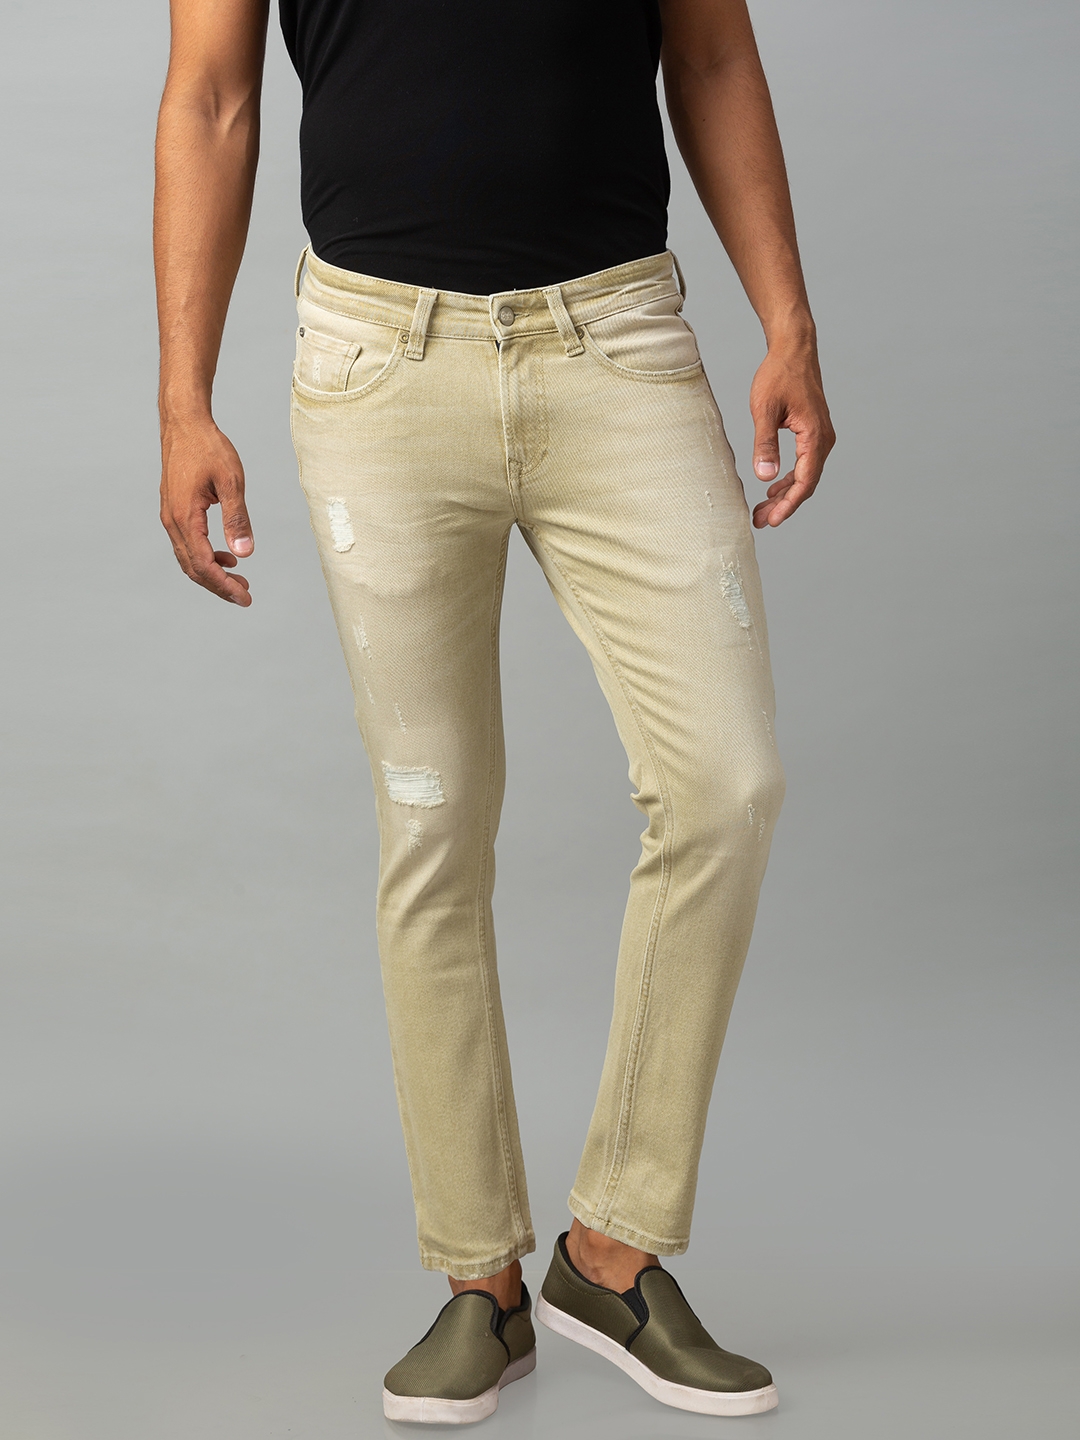 Spykar | Spykar Beige Cotton Mid Rise Slim Fit Ankle Length Jeans (Kano)